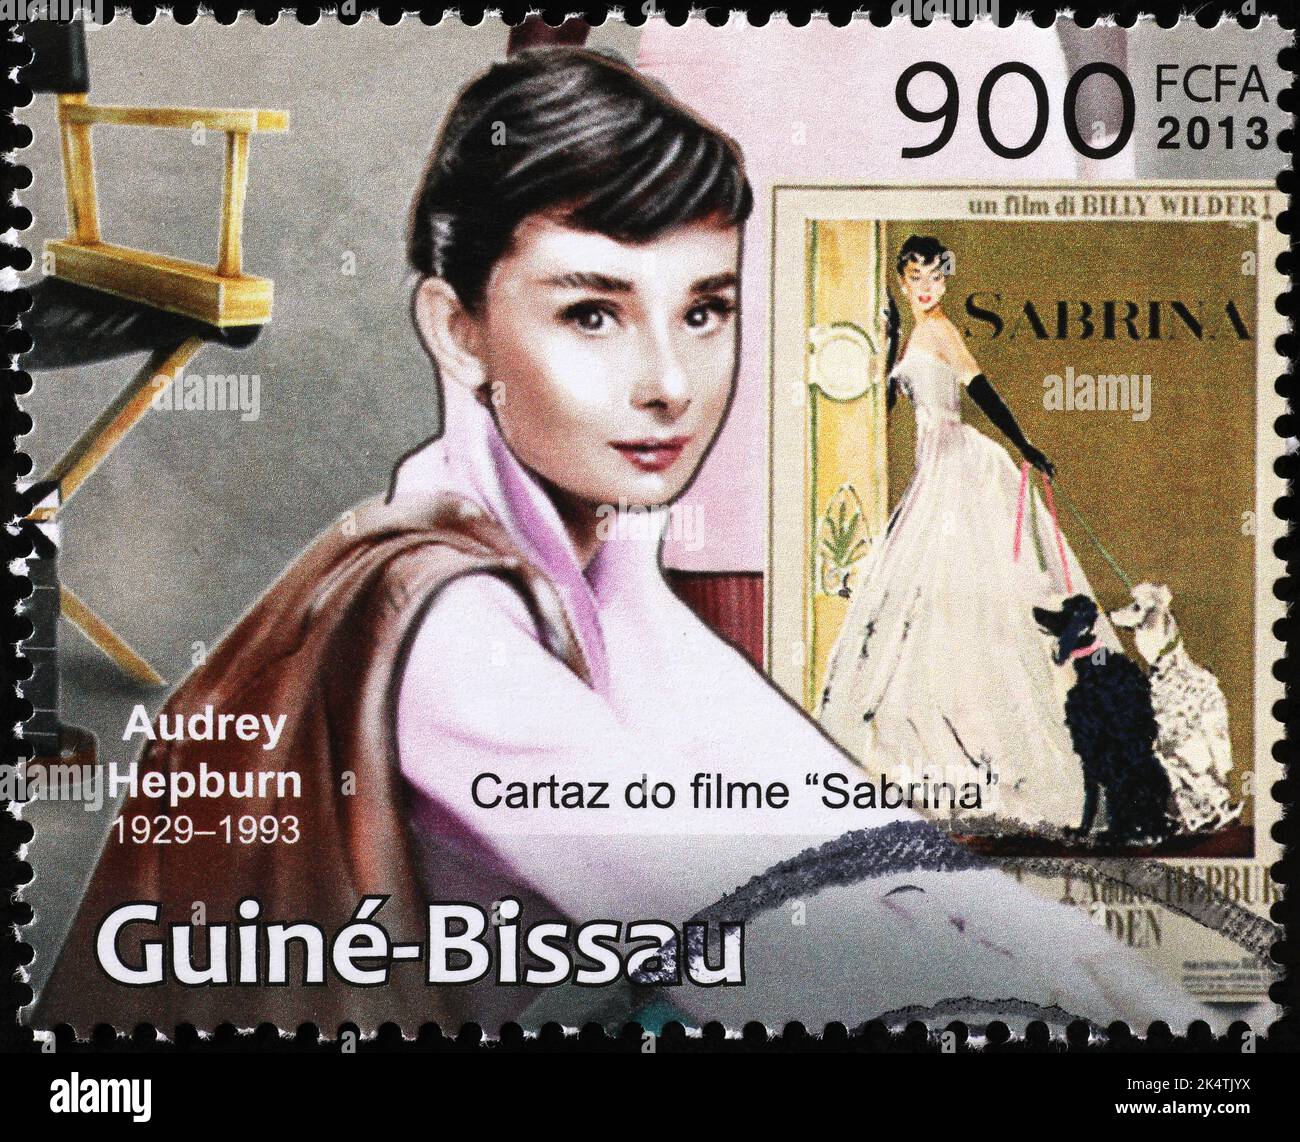 Audrey Hepburn in movie Sabrina on postage stamp Stock Photo